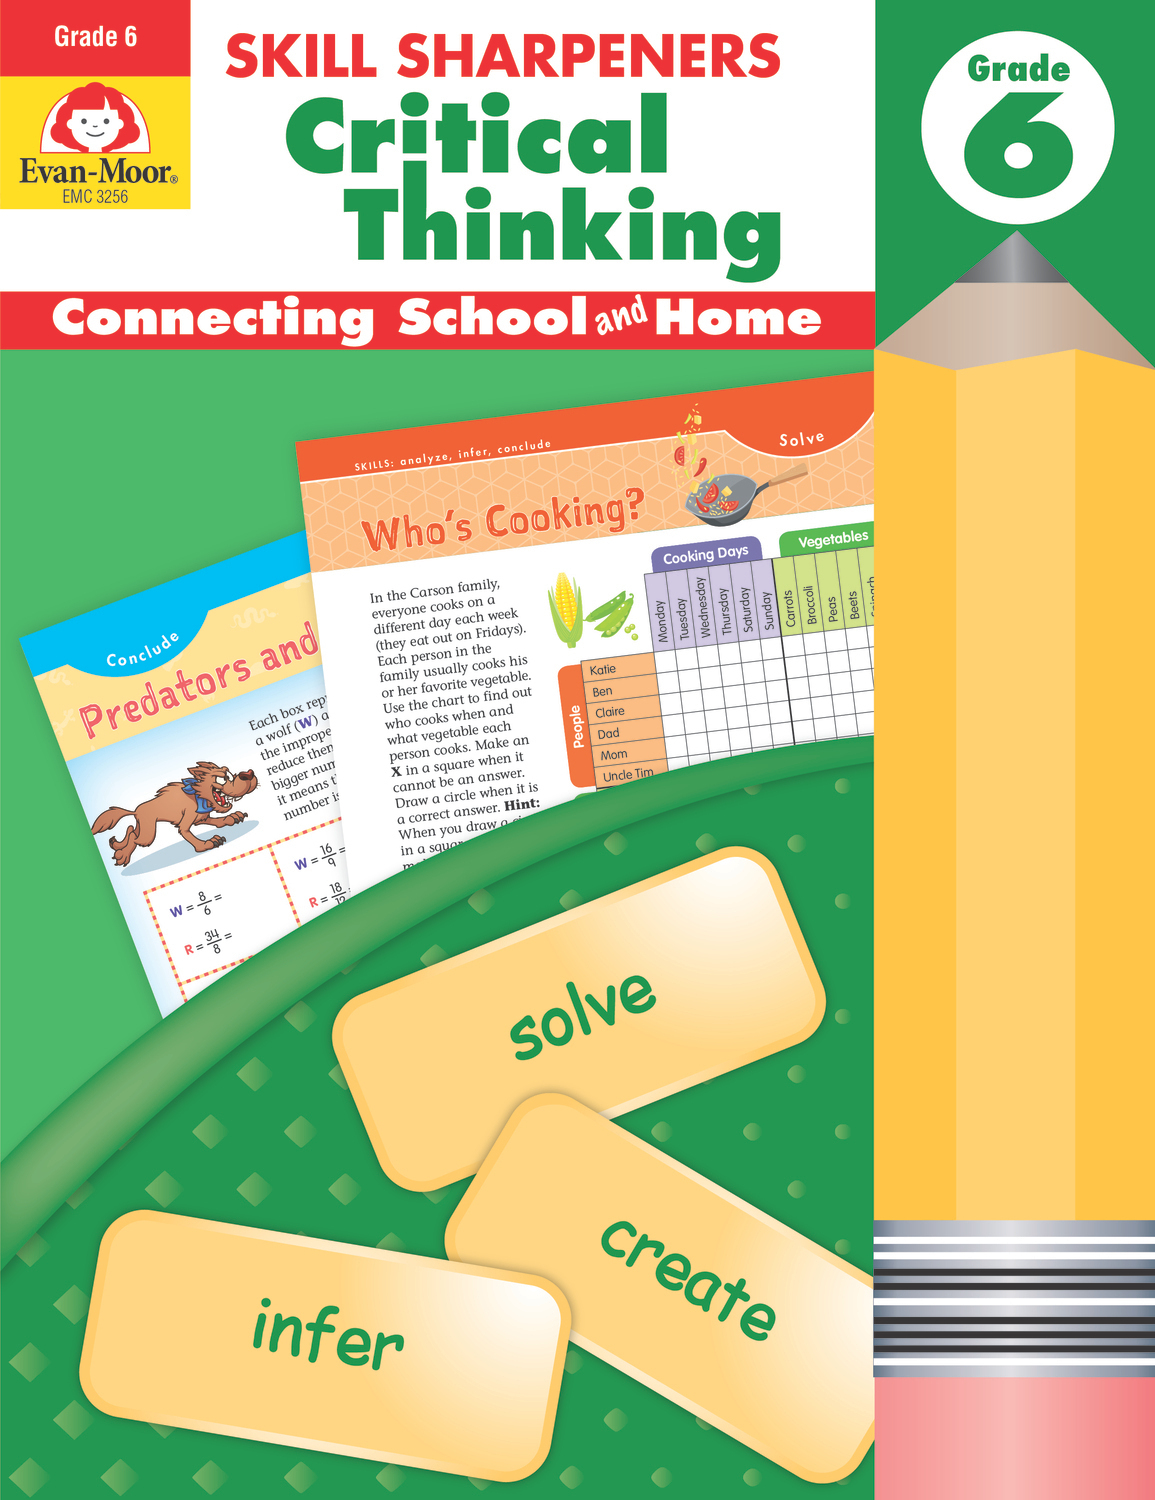 books on teaching critical thinking skills